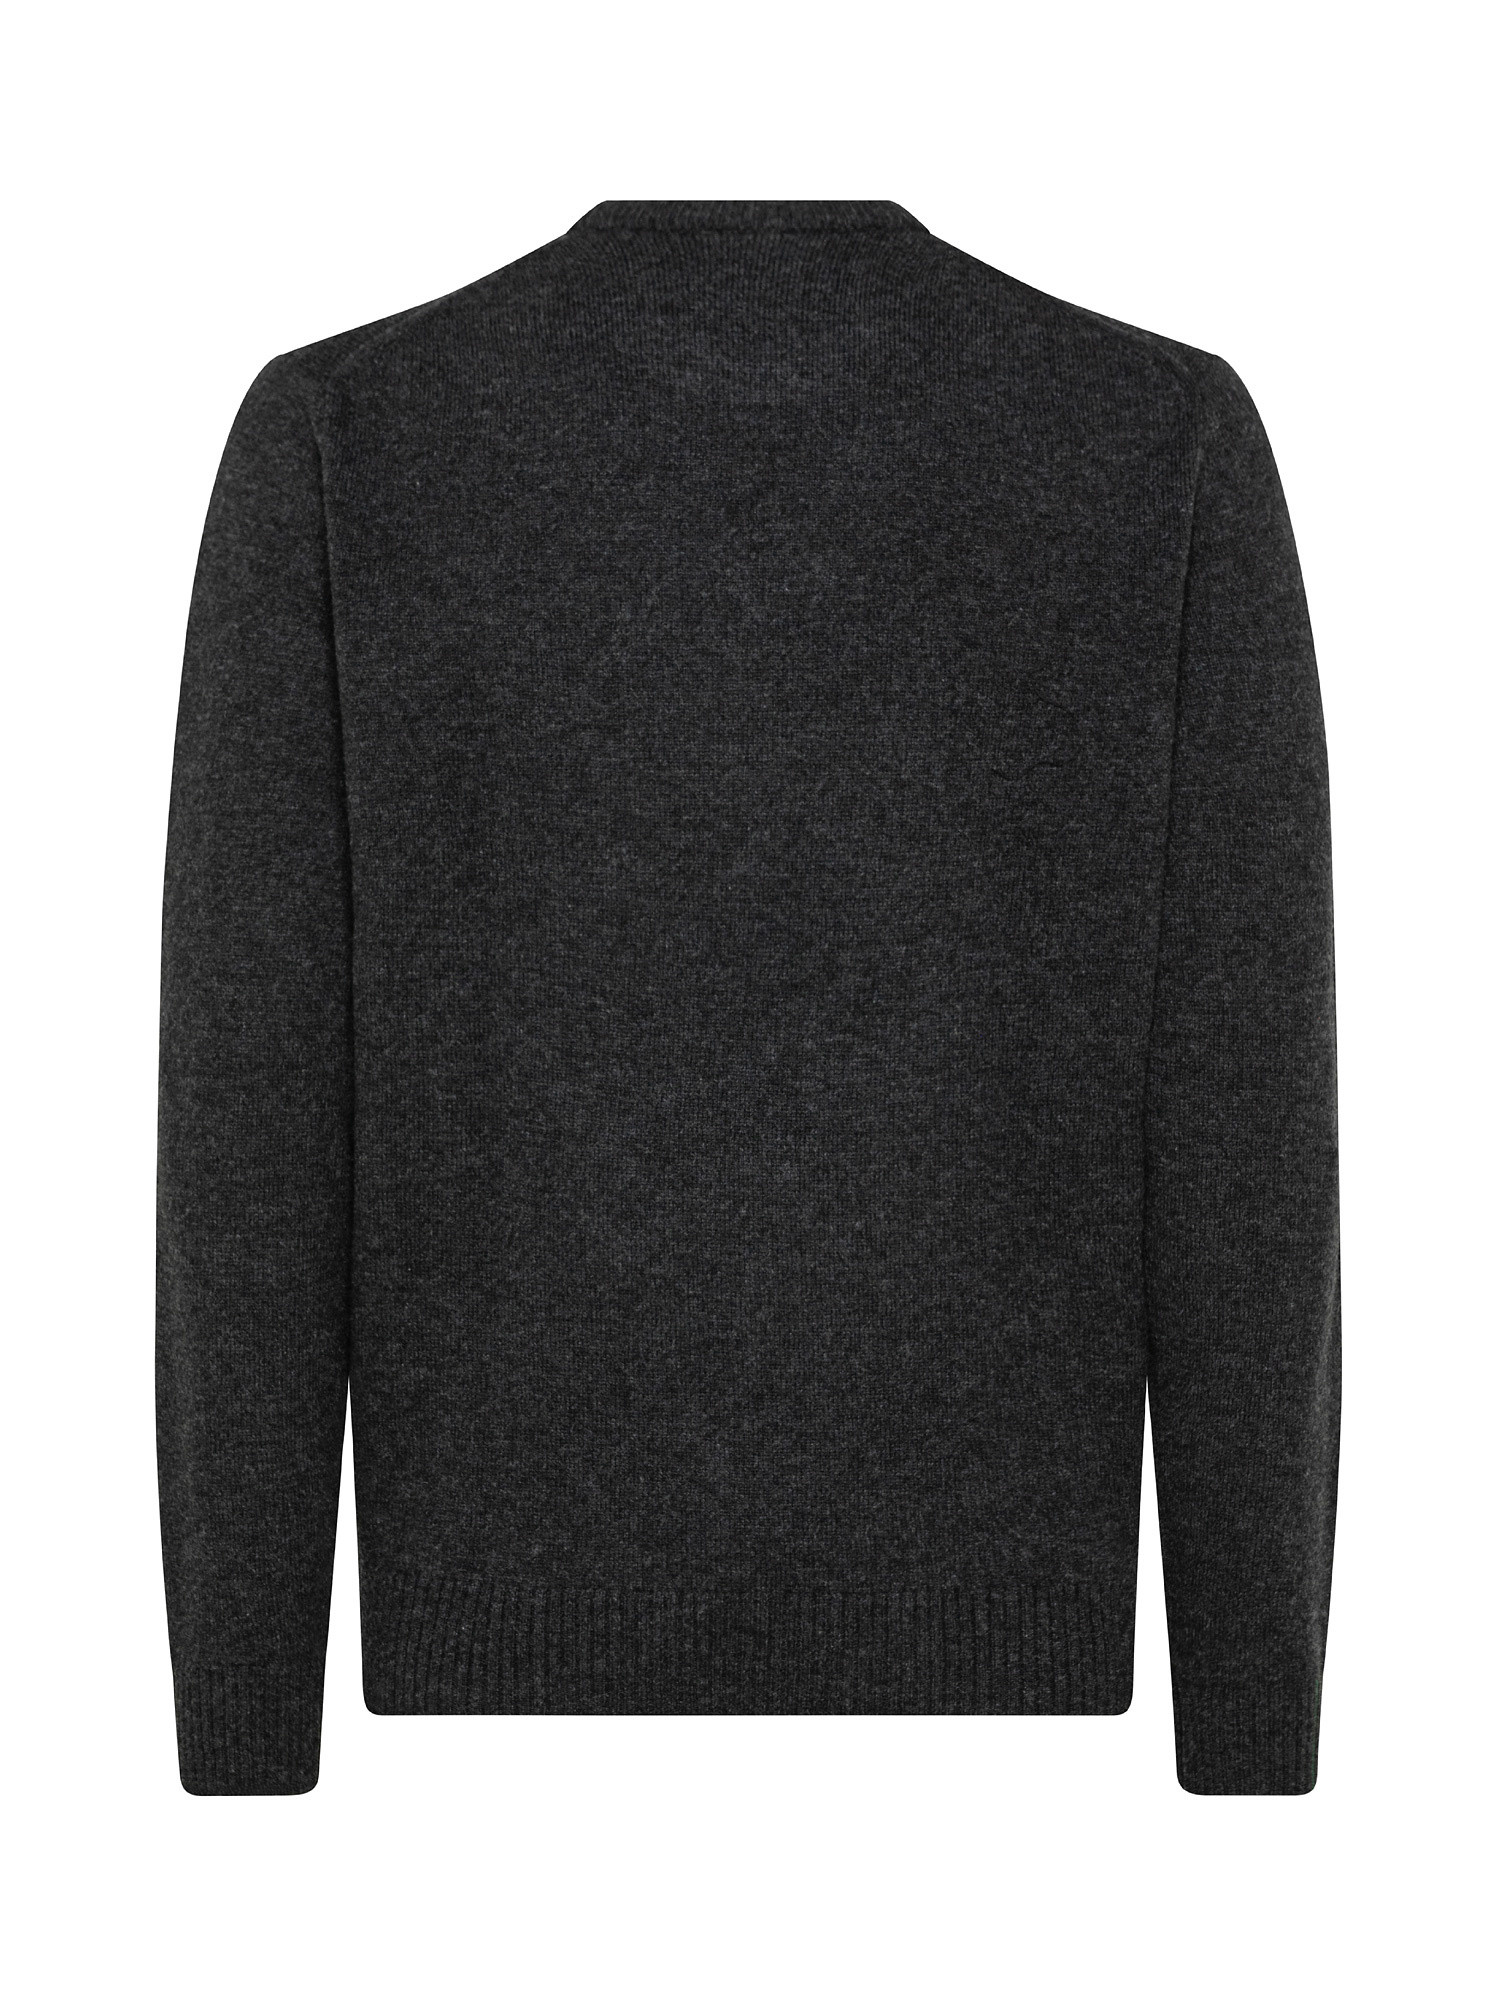 Men's organic cotton crew neck sweater, Grey, large image number 1